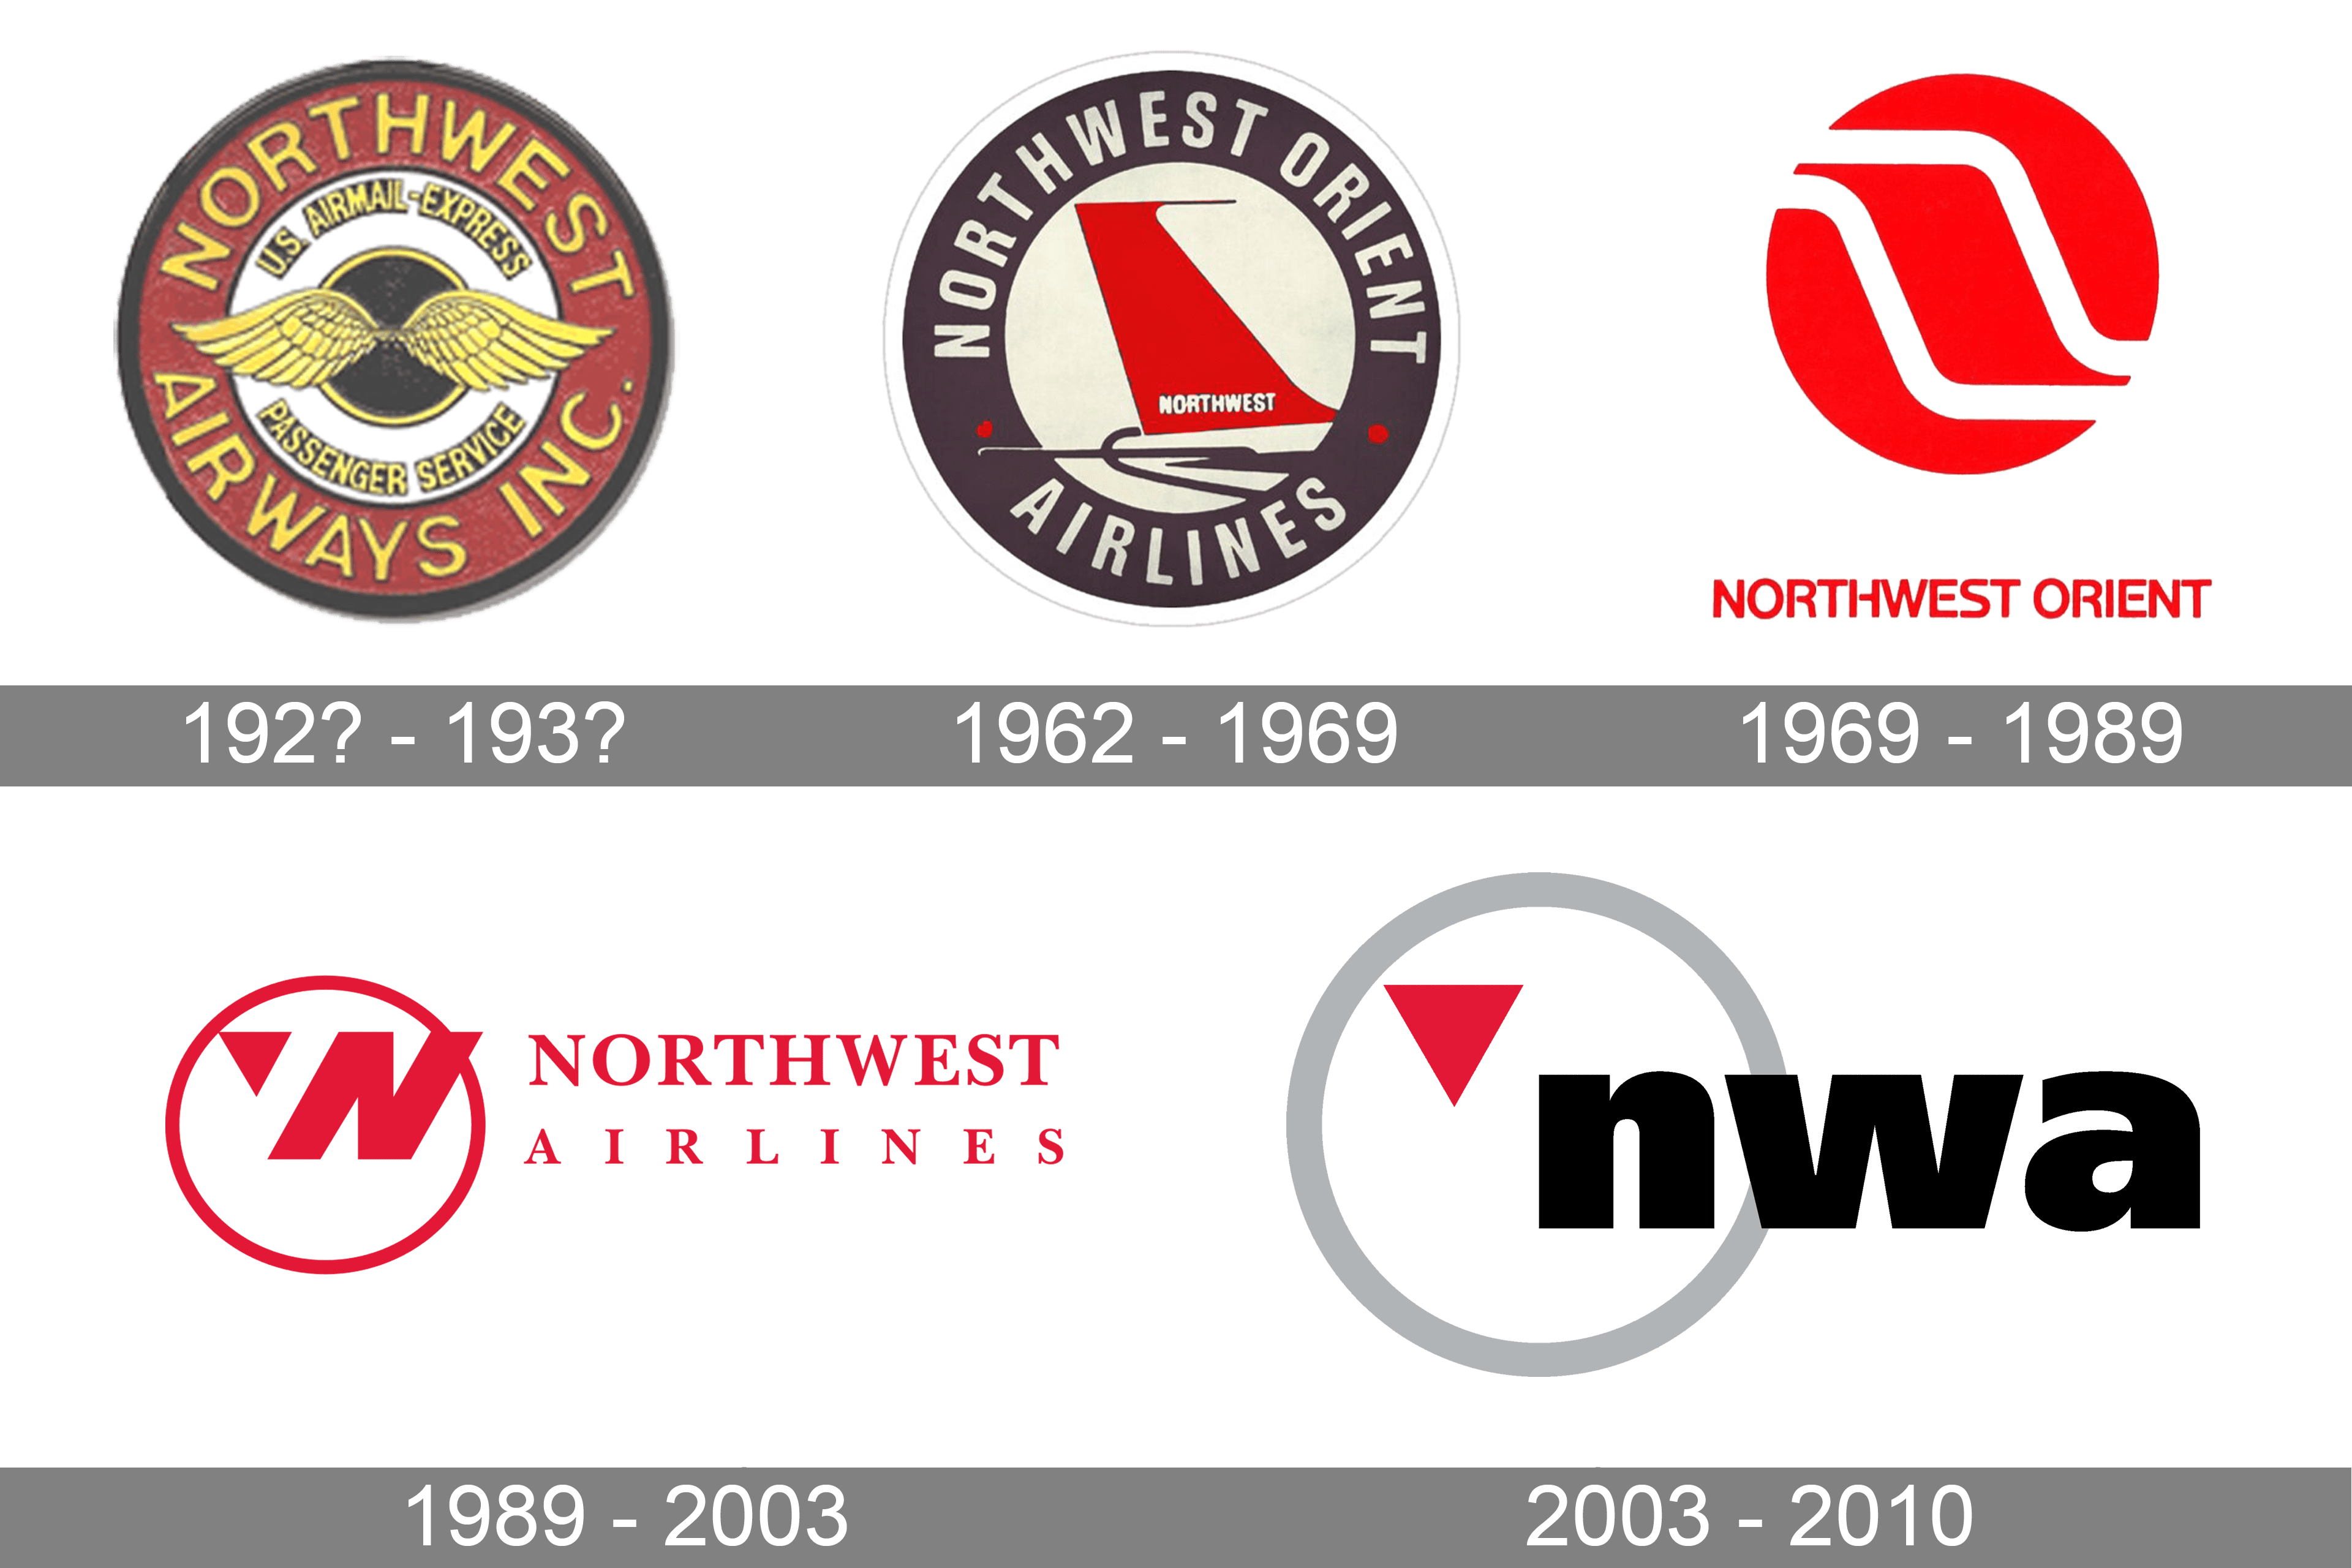 Northwest Missouri State University Branding & Logos usage guidelines